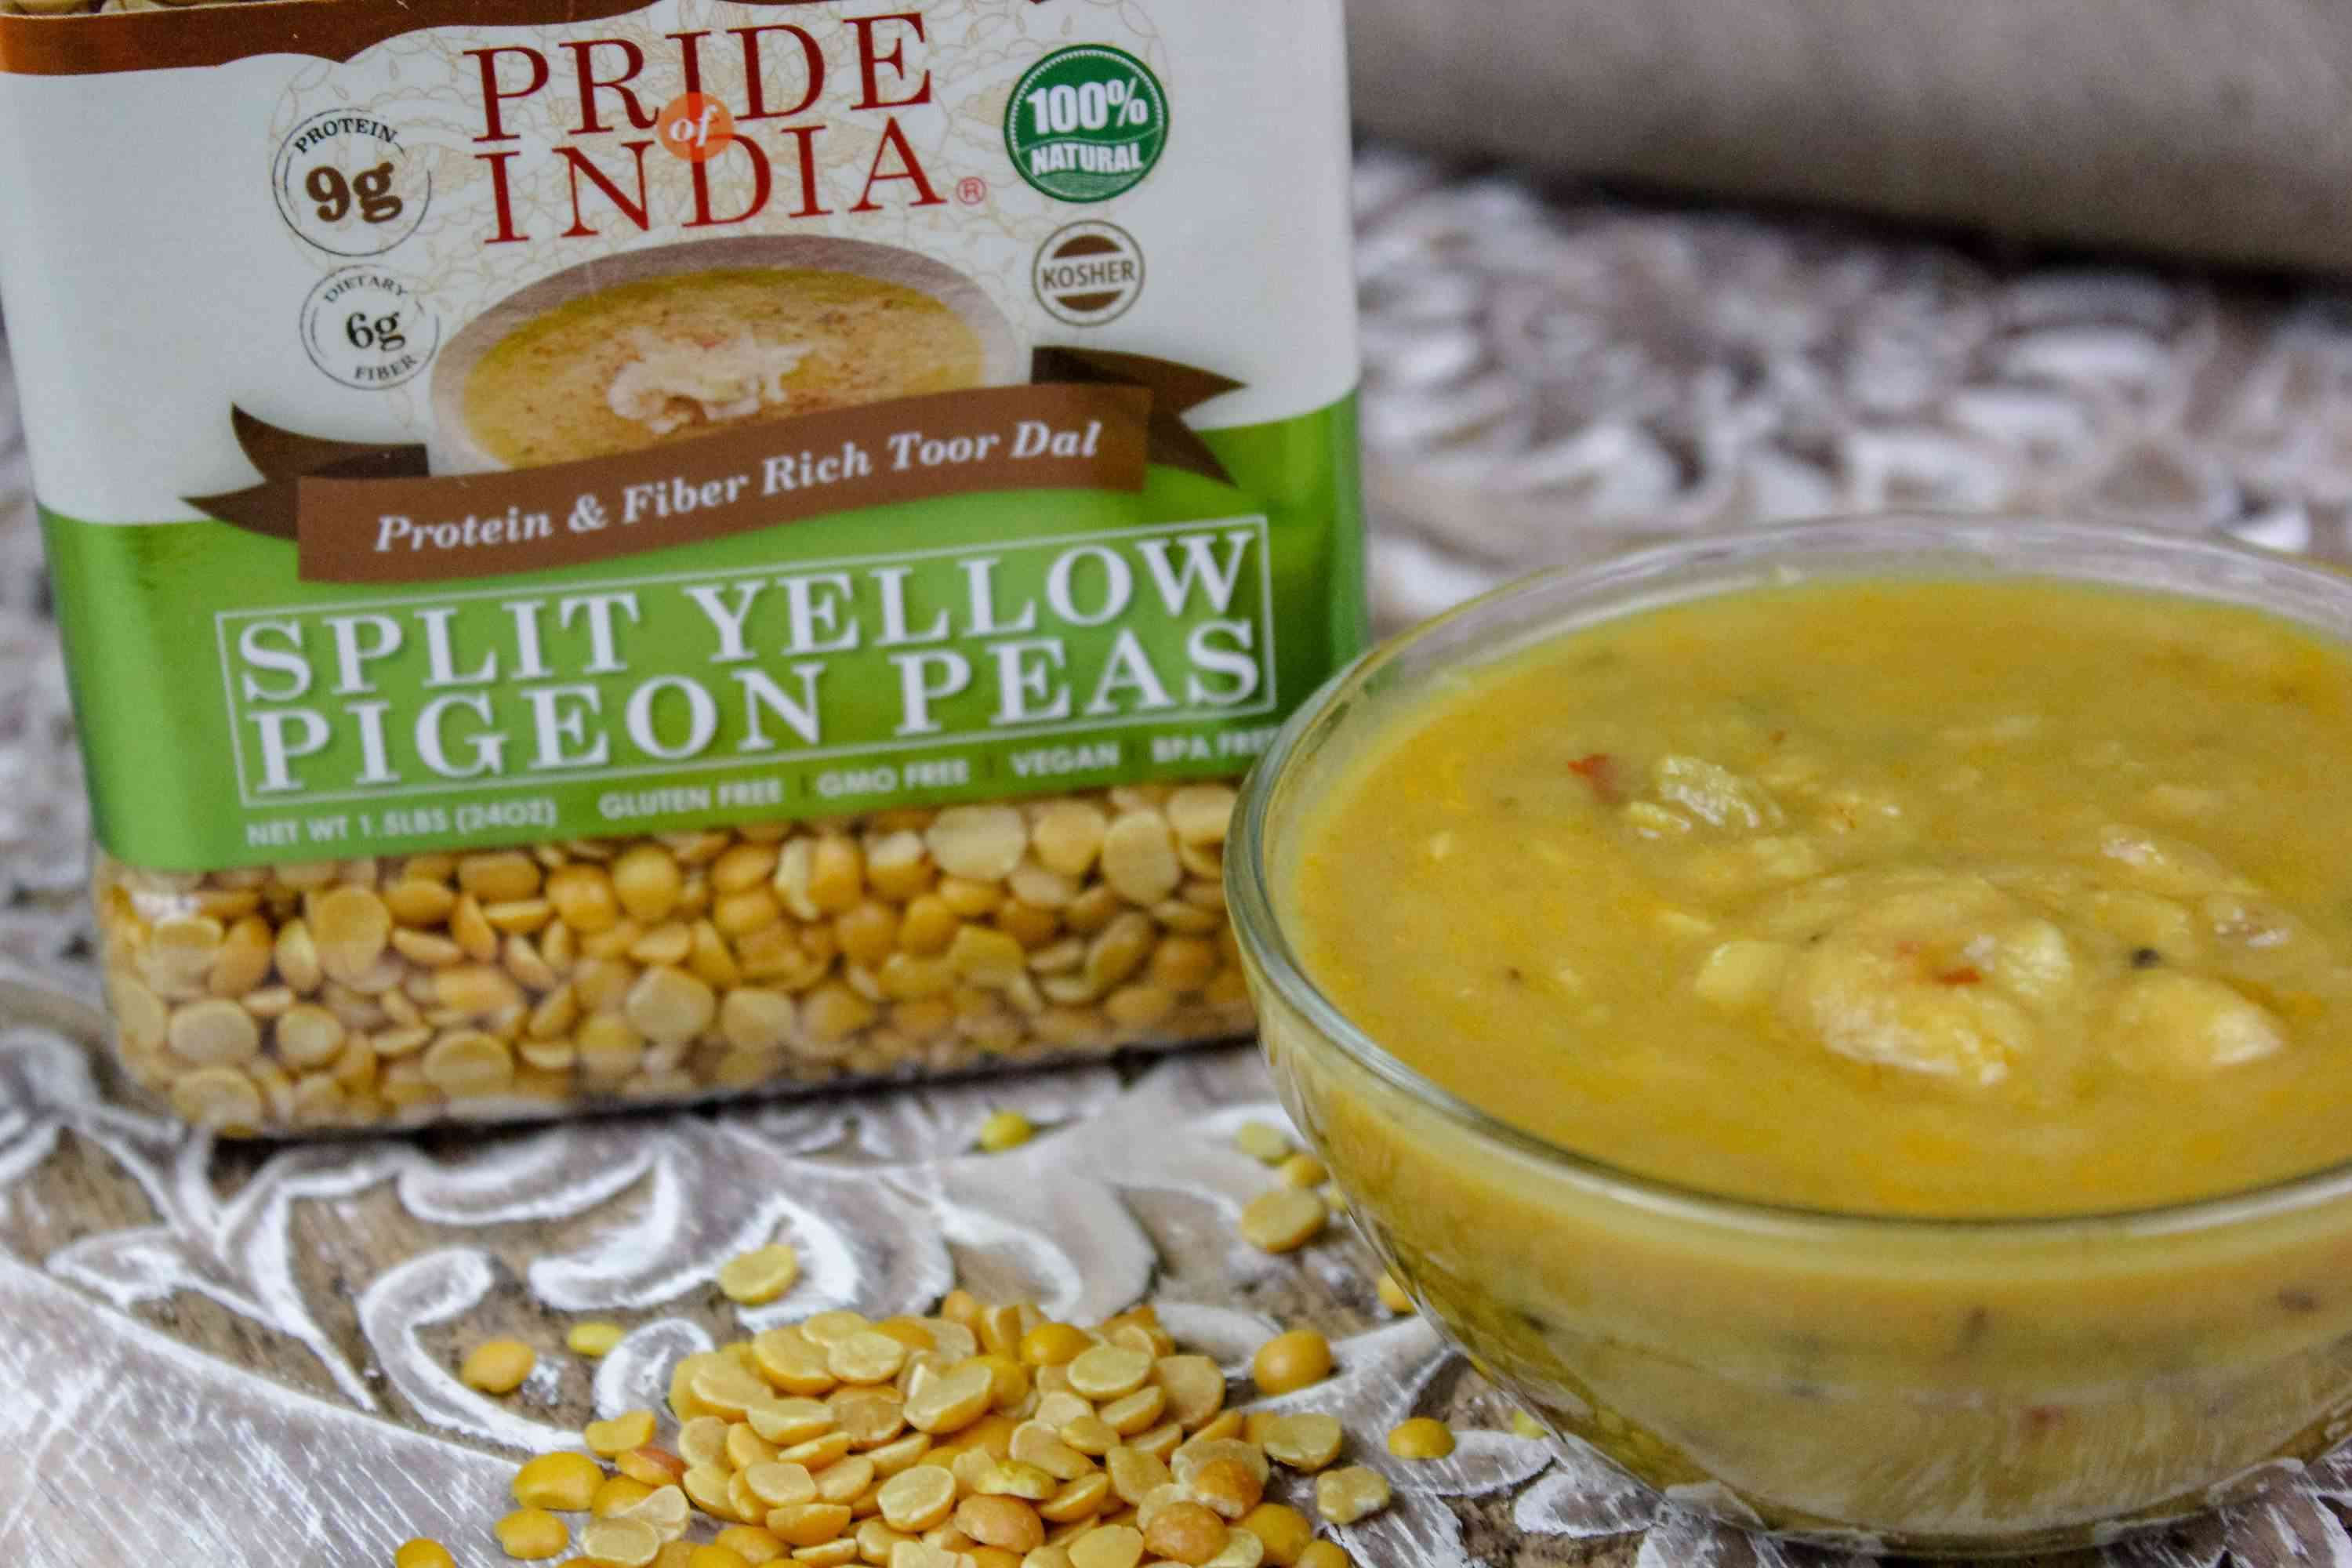 Indian Split Yellow Pigeon Peas - Protein & Fiber Rich Toor Dal Jar